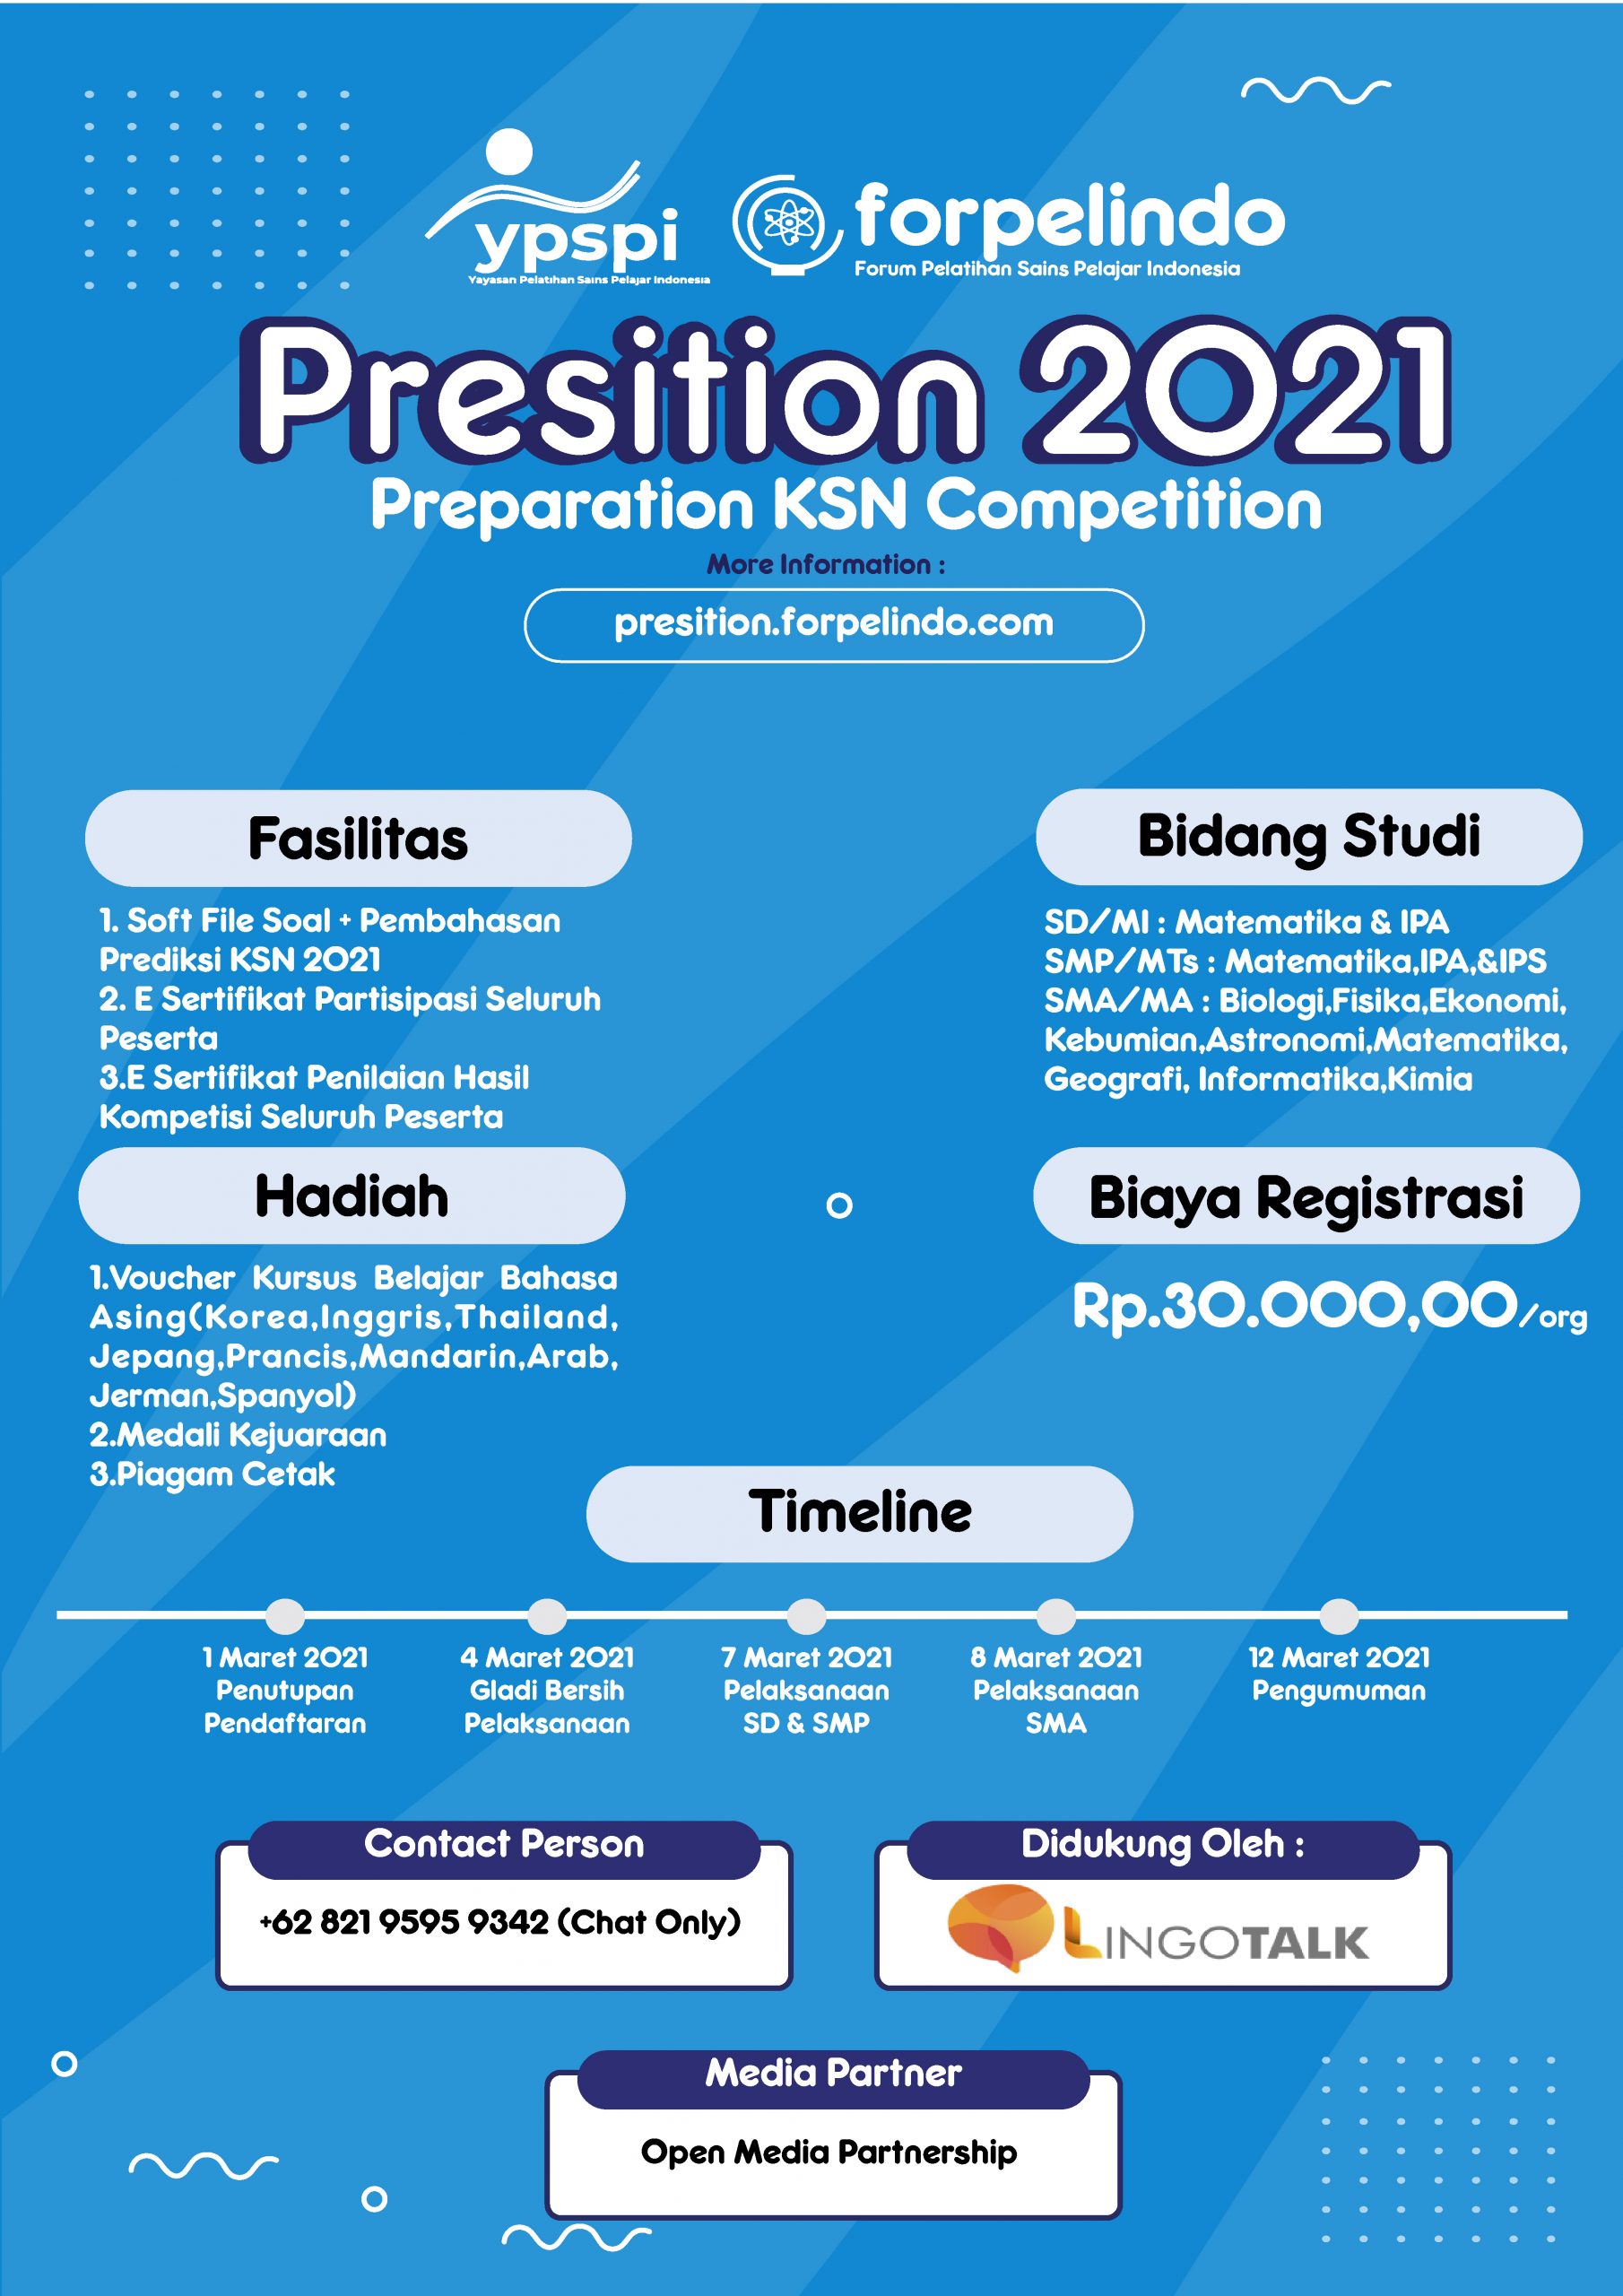 Presition 2021